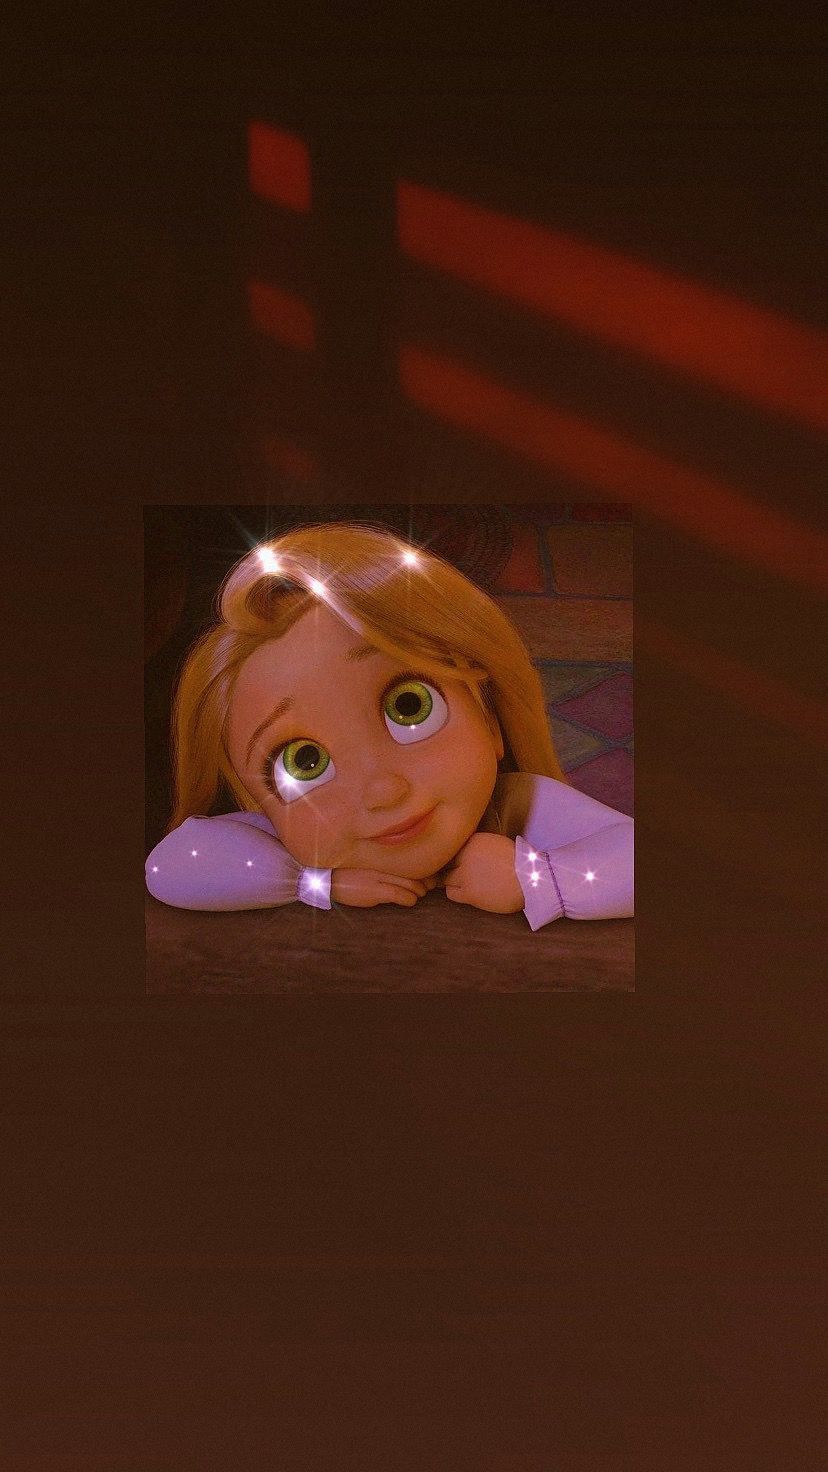 Mini Rapunzel. Disney wallpaper, Cute disney wallpaper, Wallpaper iphone disney princess